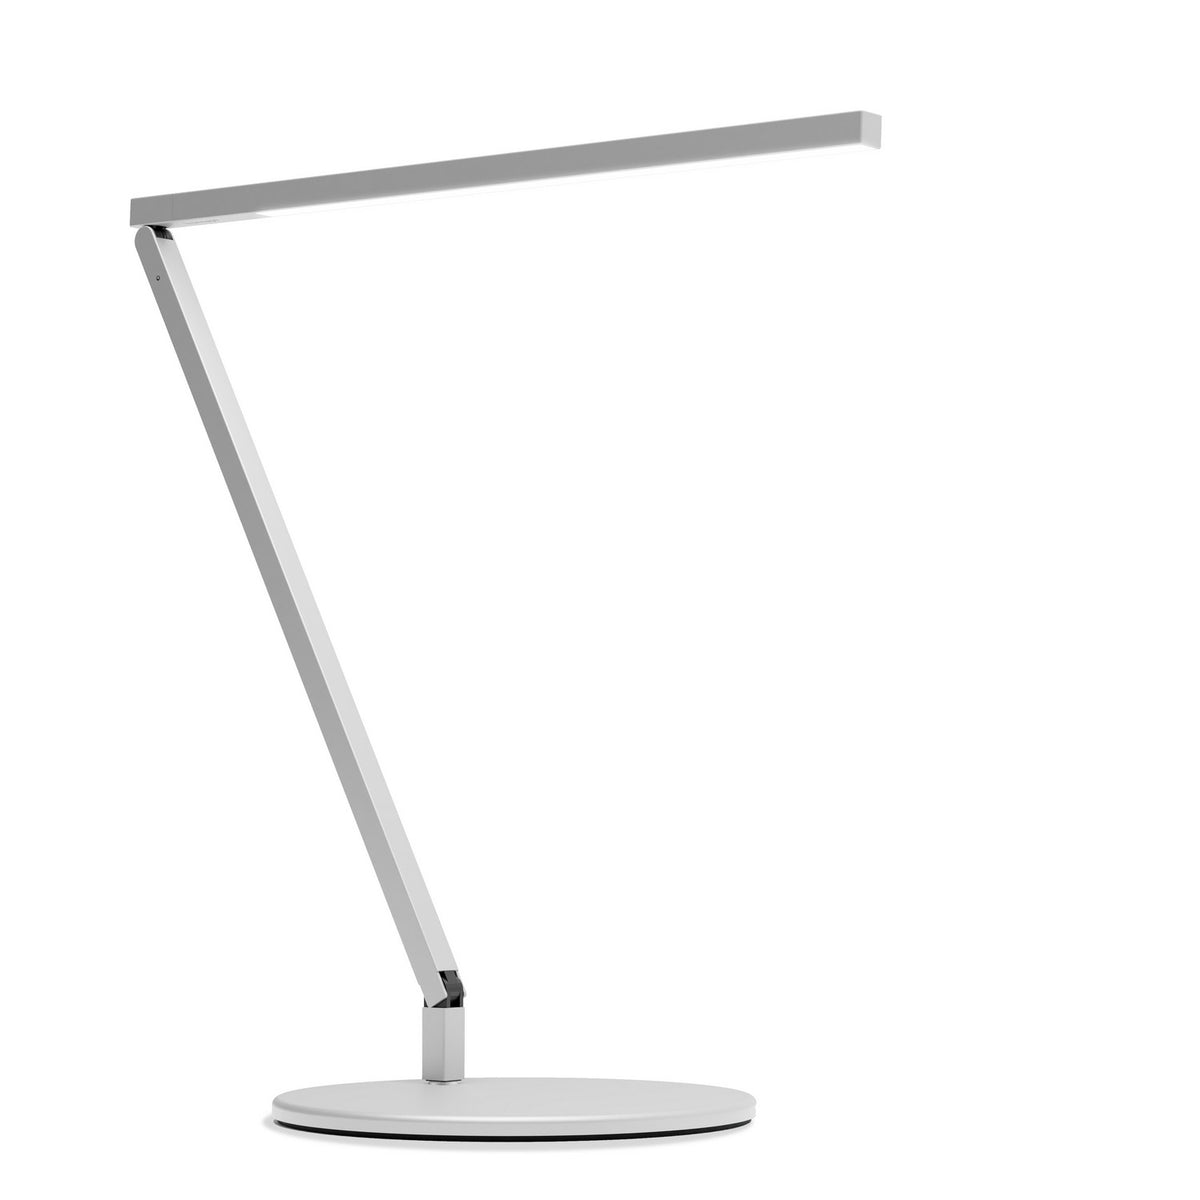 Koncept - ZBD1000-D-SIL-DSK - LED Desk Lamp - Z-Bar - Silver